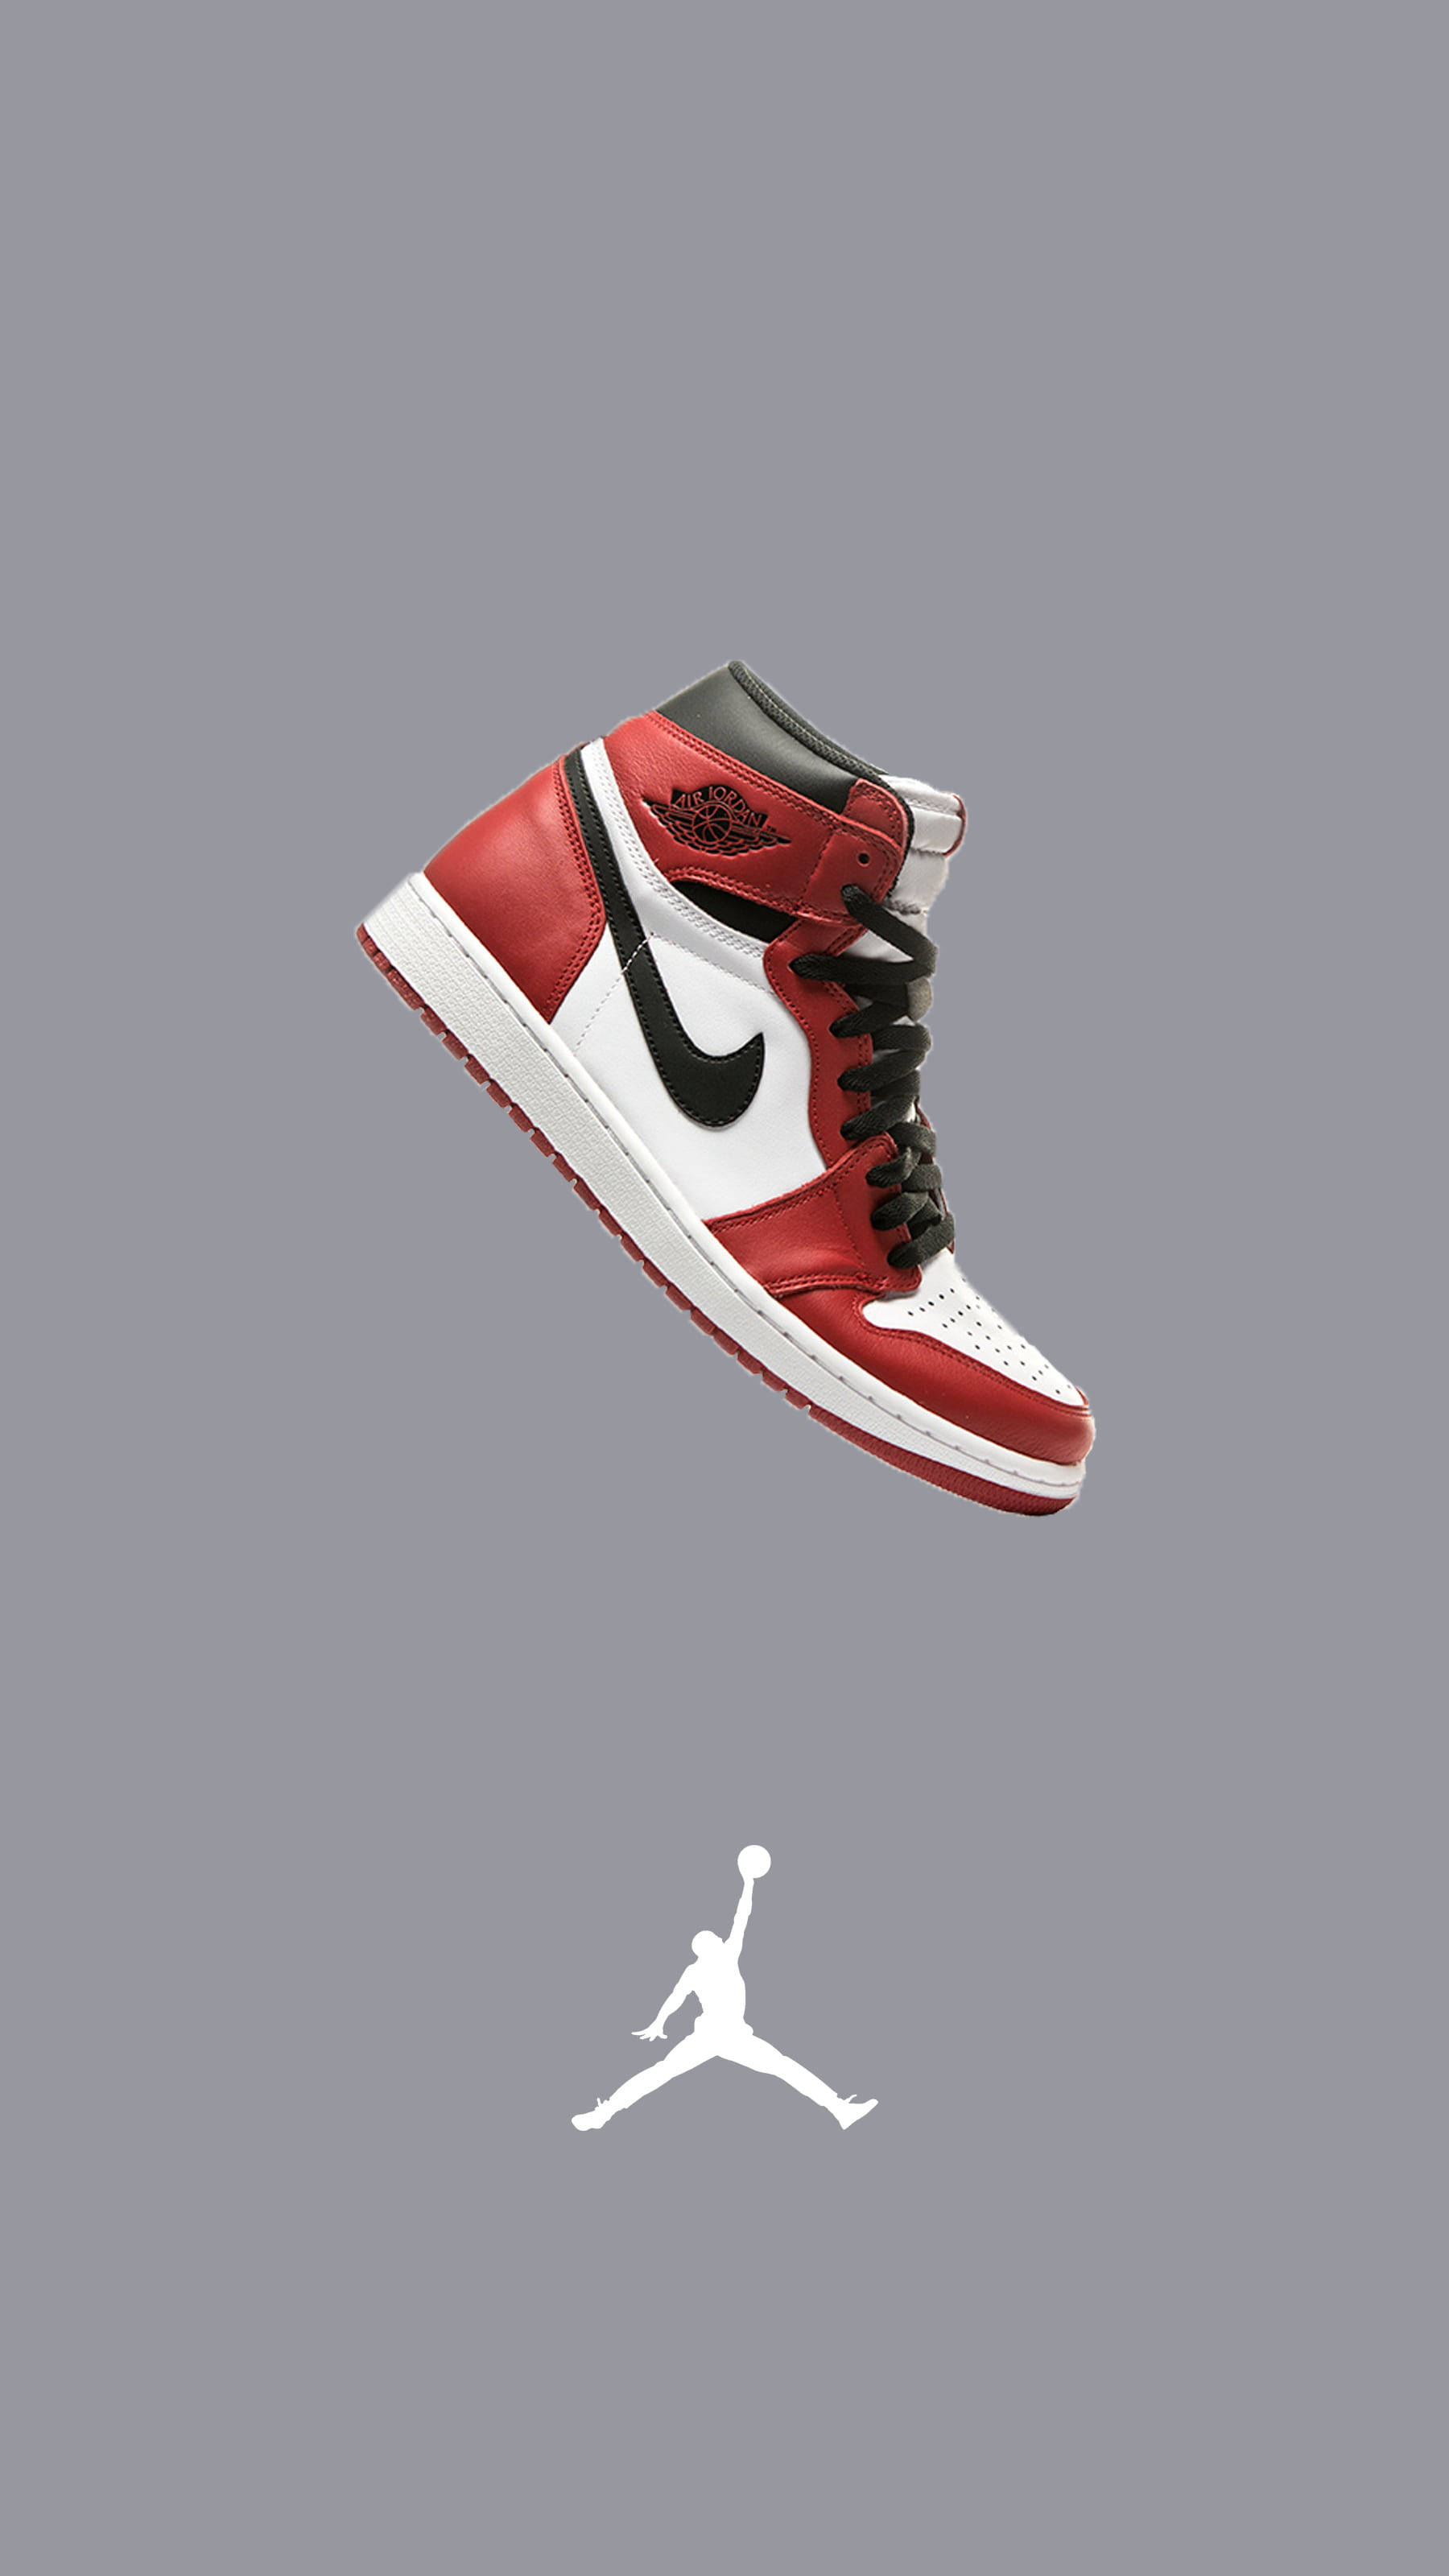 Download Iconic Nike Jordan 1 Photo Wallpaper | Wallpapers.com